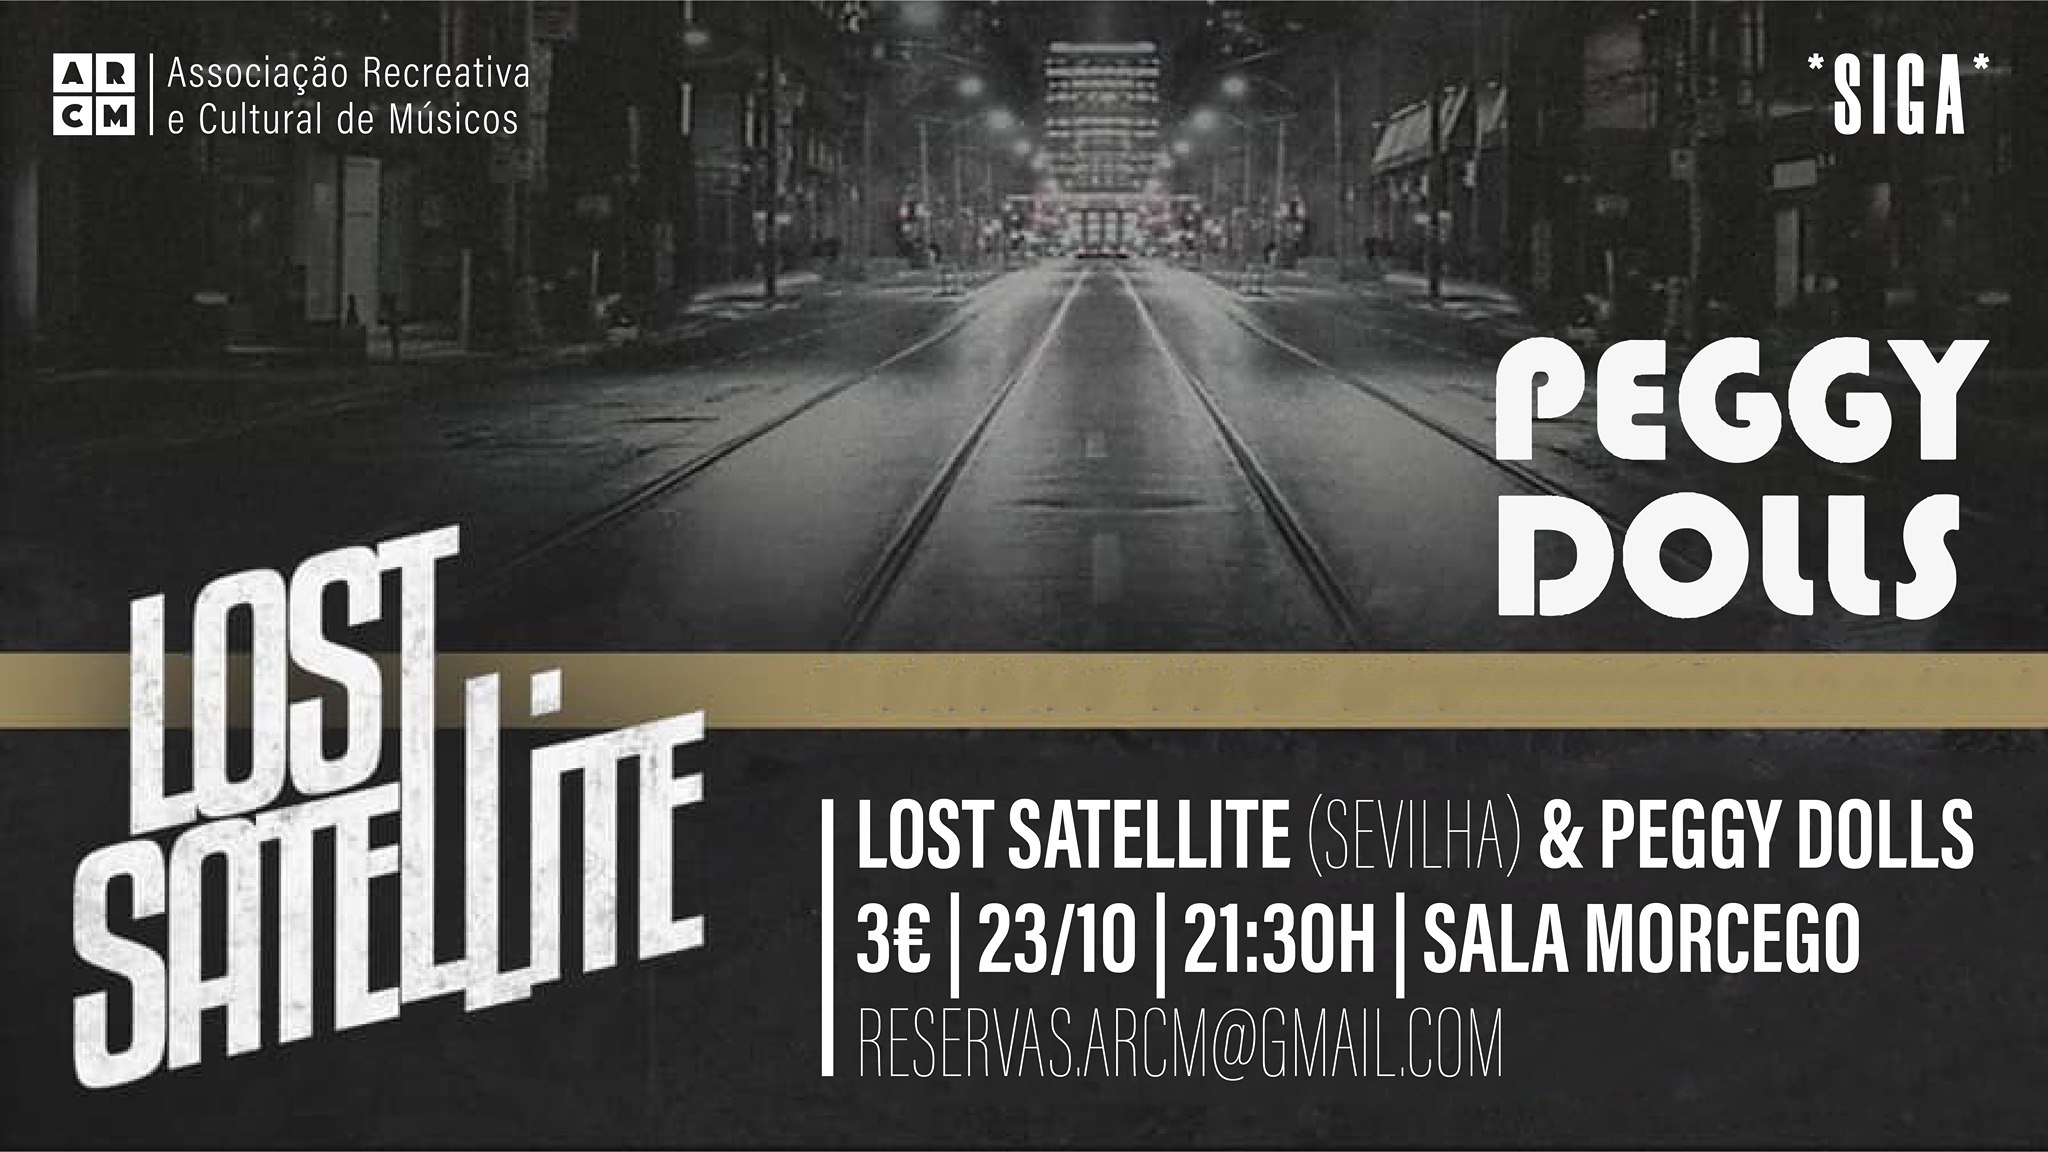 Lost Satellite (Sevilha) & Peggy Dolls  |  *SIGA*